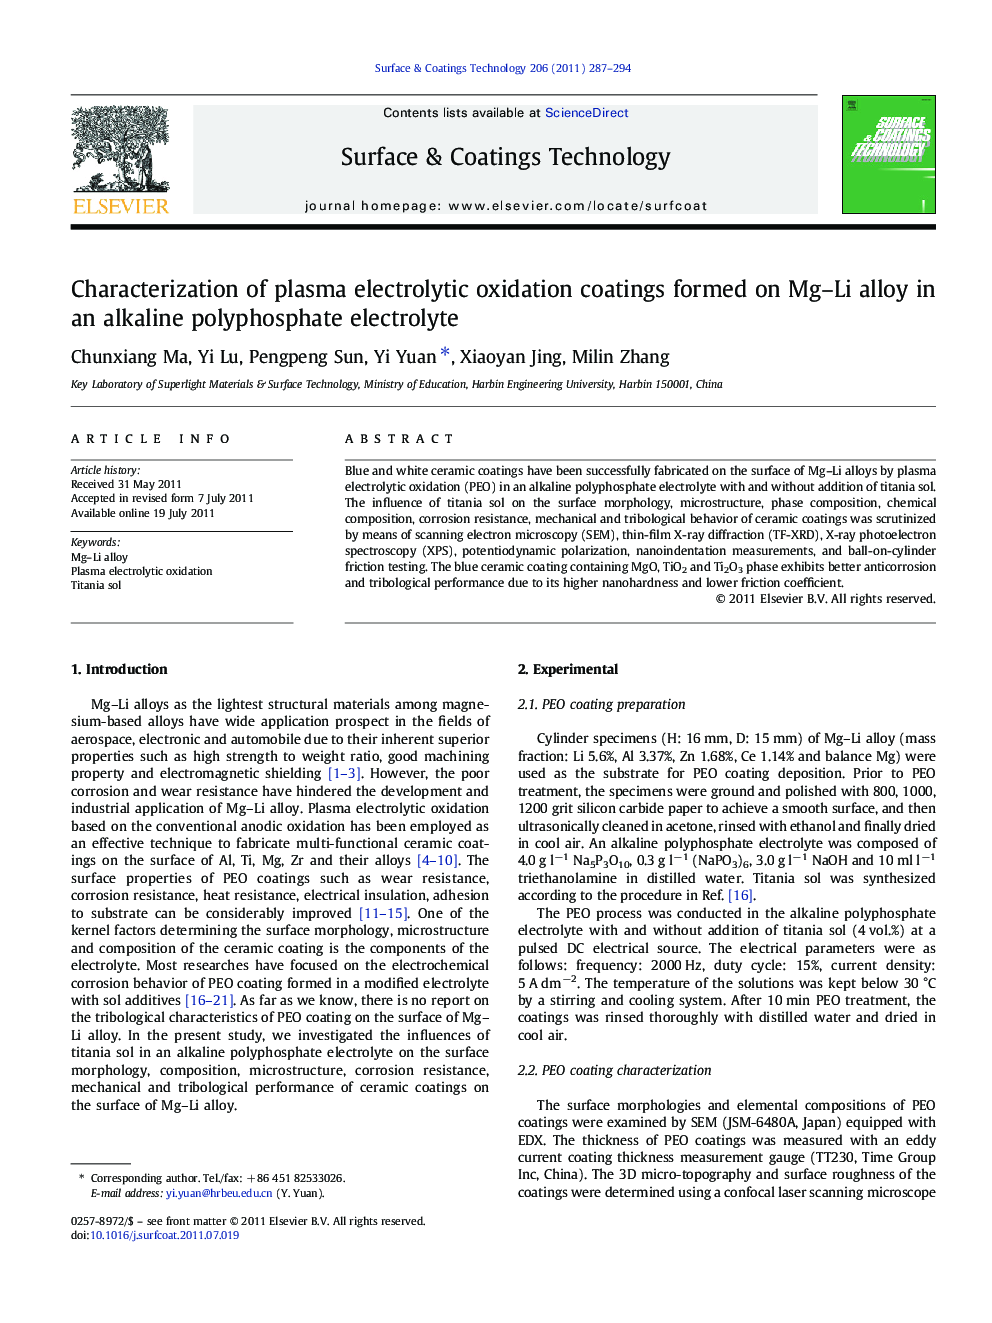 Characterization of plasma electrolytic oxidation coatings formed on Mg-Li alloy in an alkaline polyphosphate electrolyte